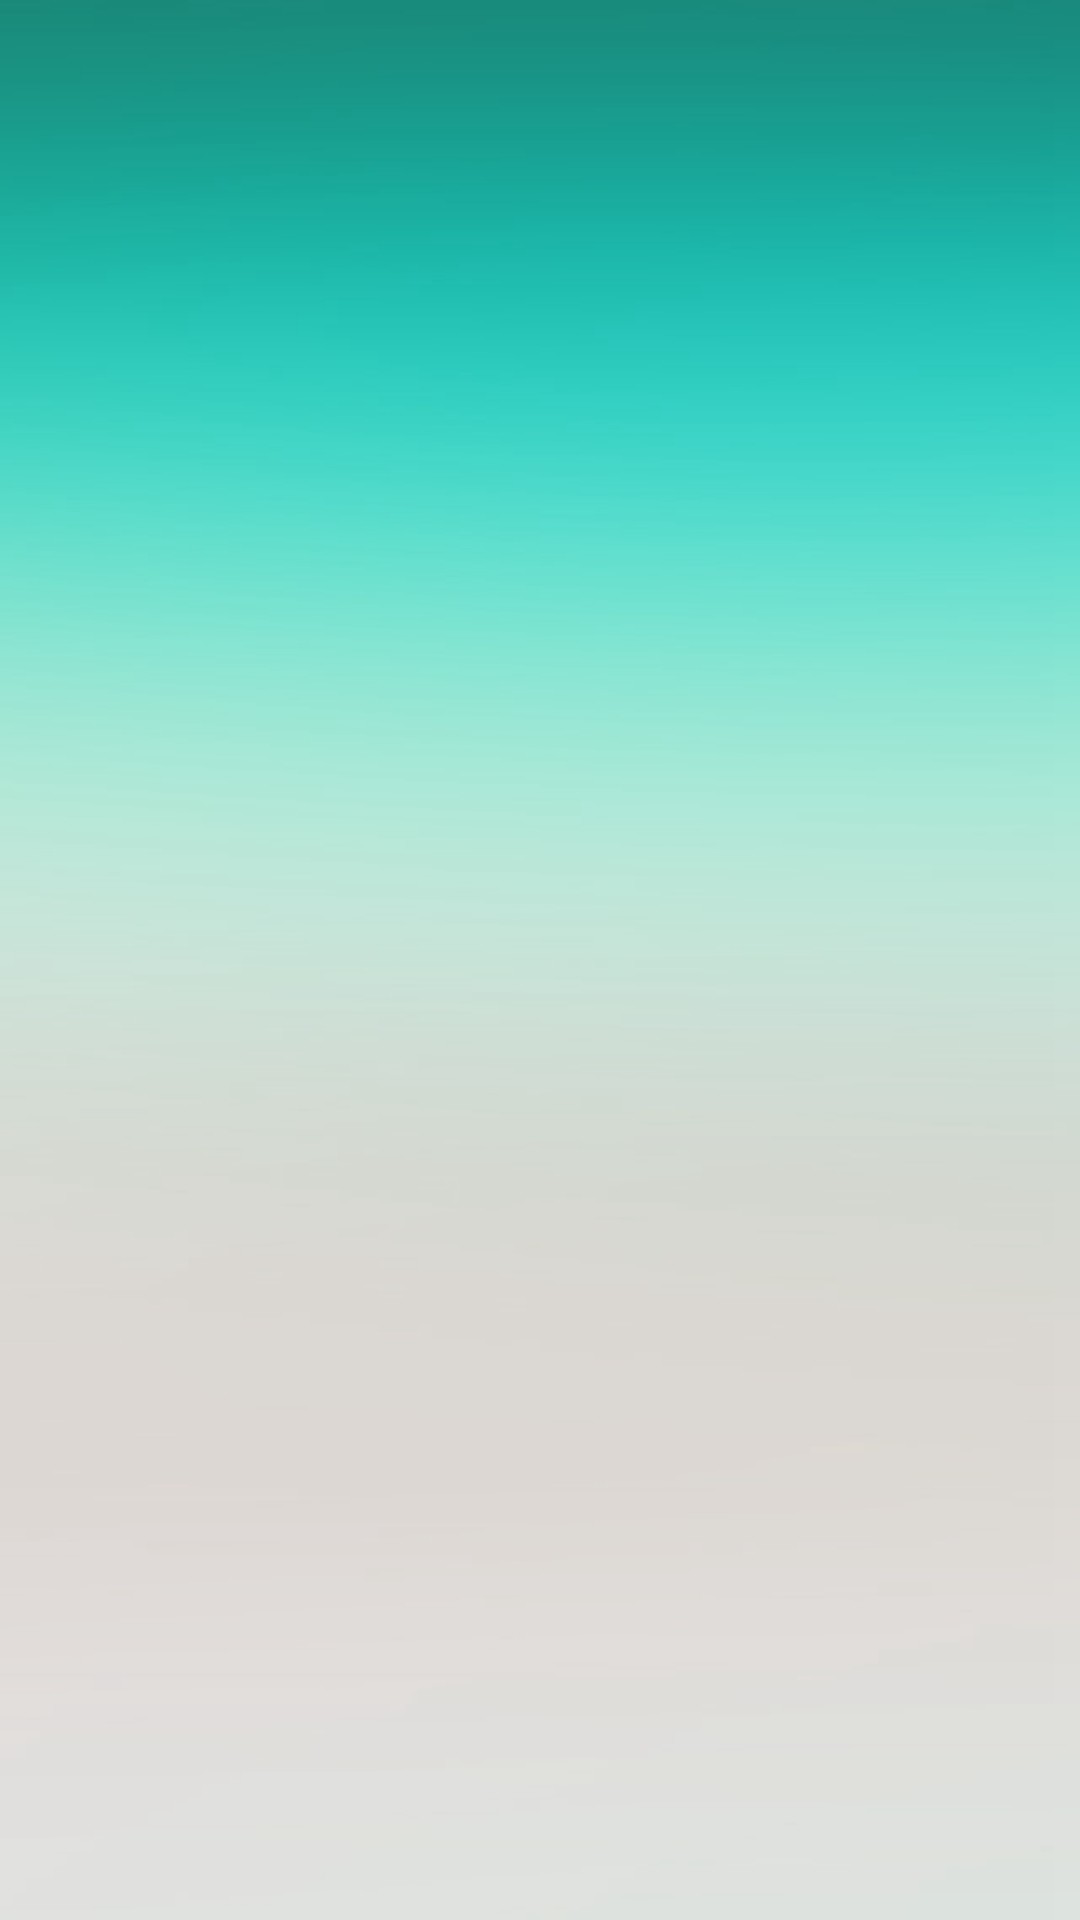 1080x1920 Sky Green Clear White Gradation Blur iPhone 6 wallpaper